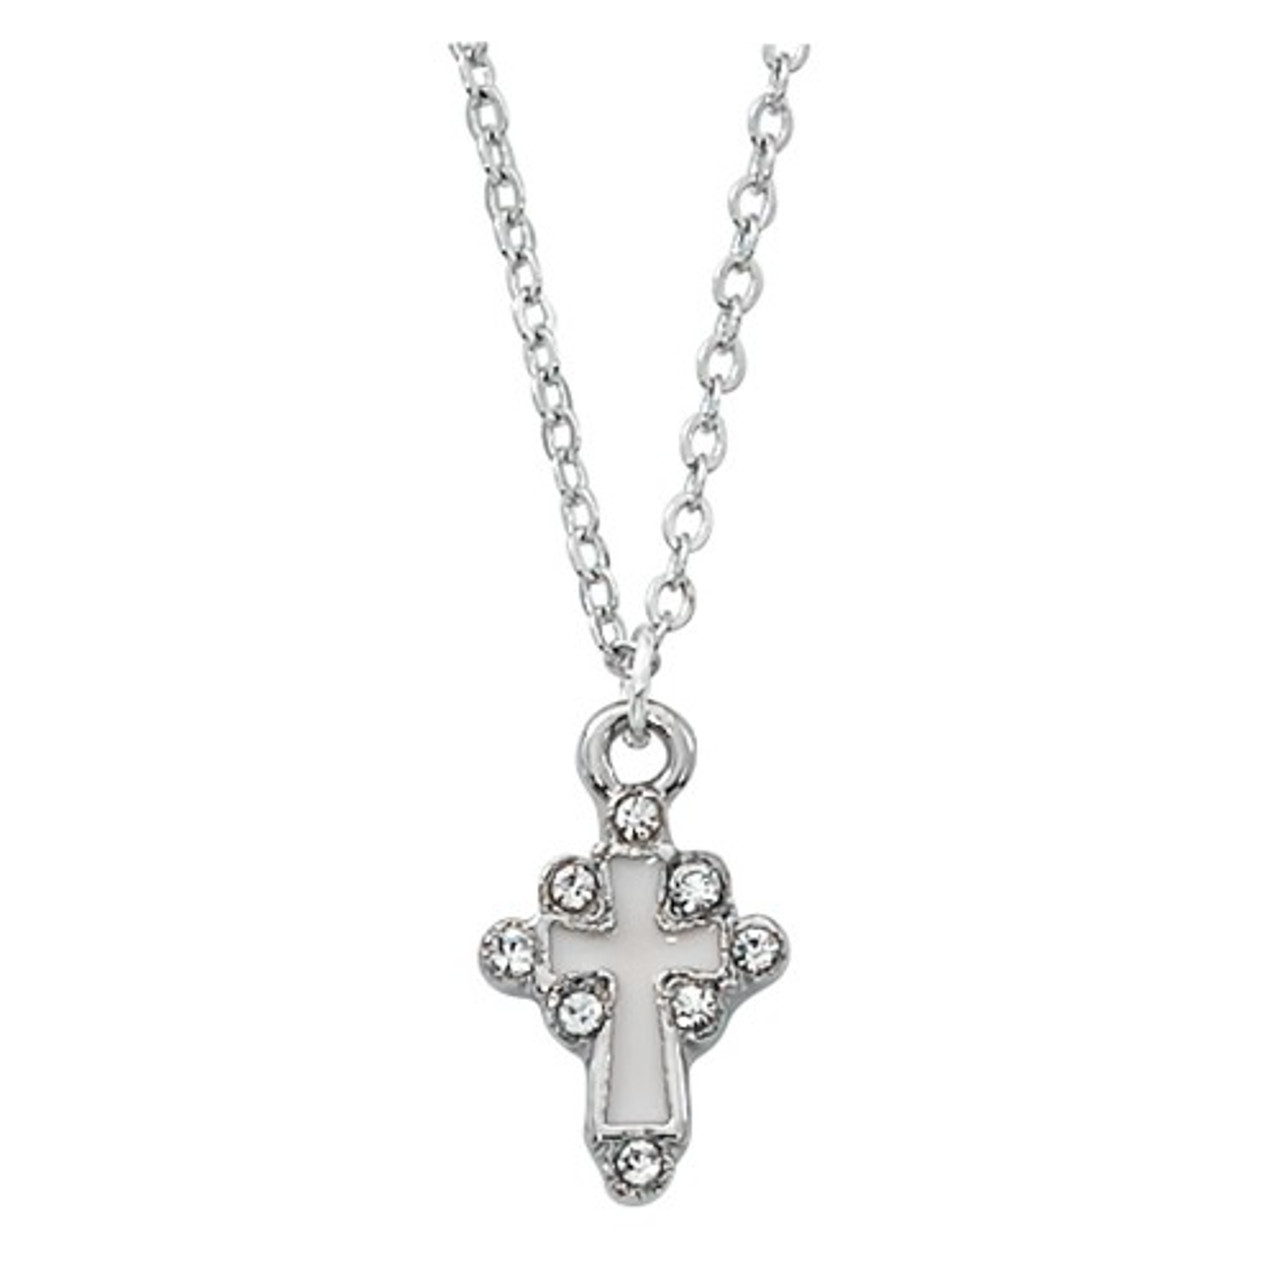 Cross Necklace & Earrings Set | White Enamel & Silver | Crystal Accents ...